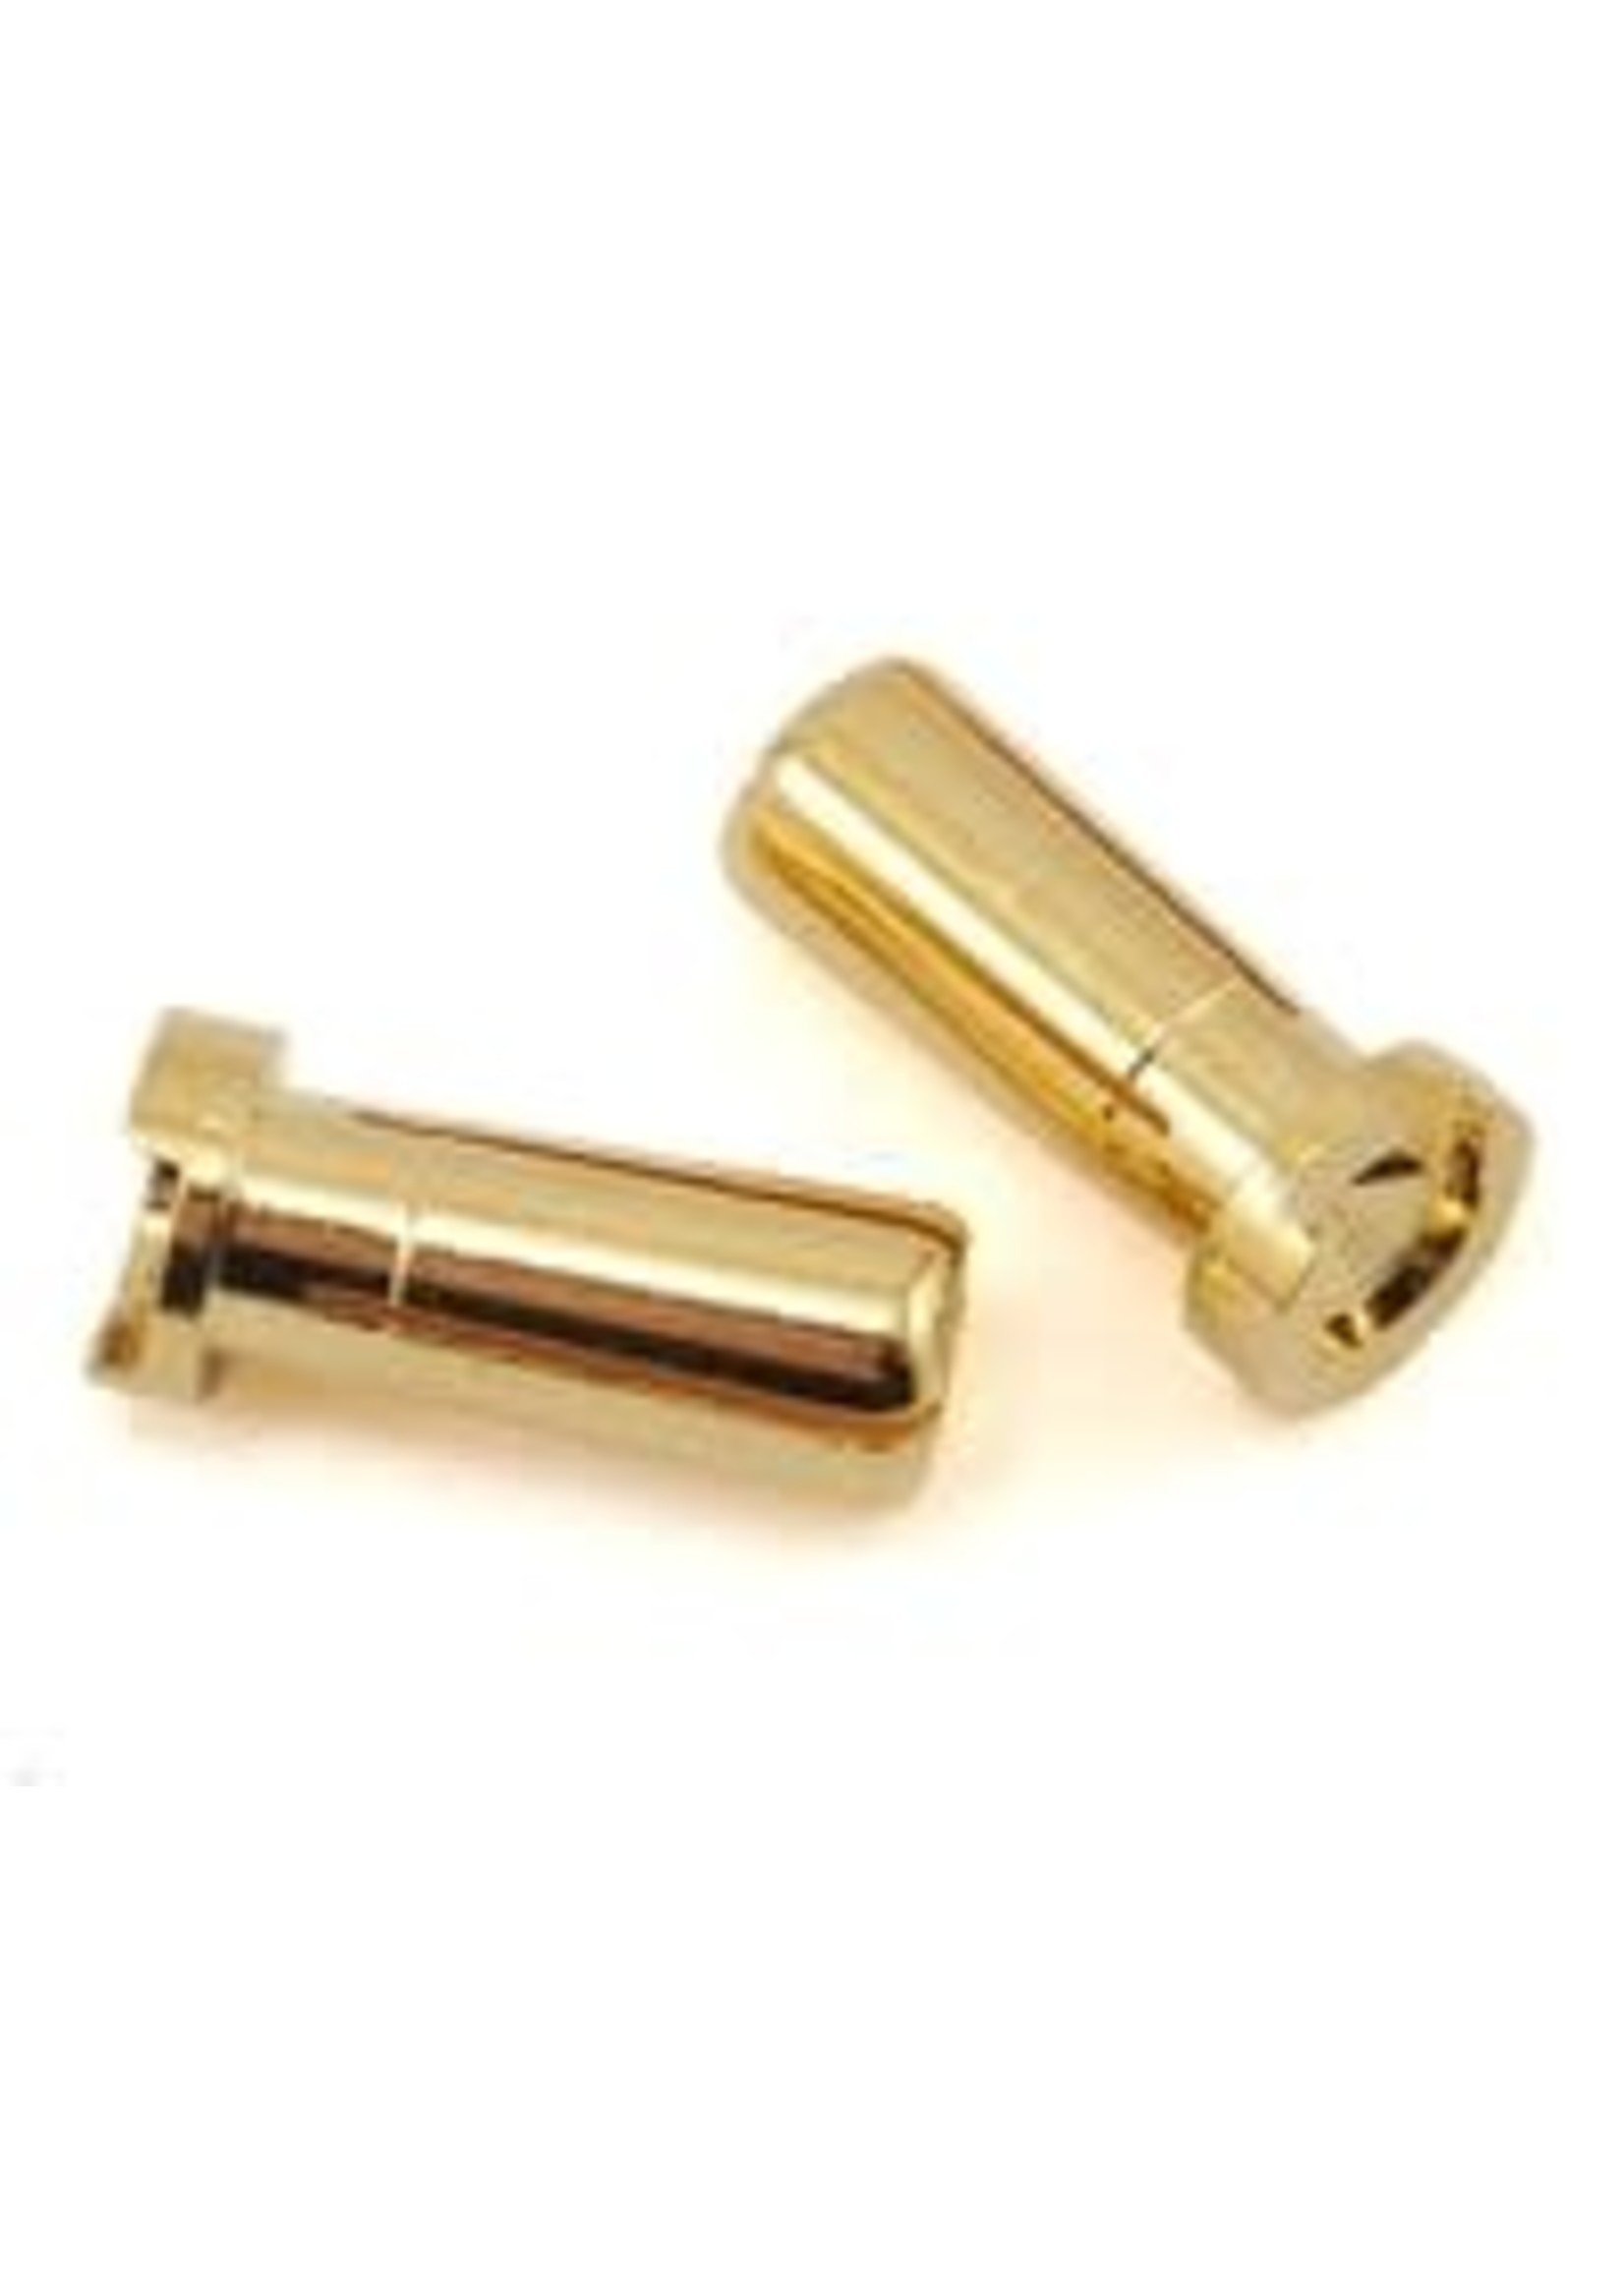 ProTek RC PTK-5045 ProTek RC Low Profile 5mm "Super Bullet" Solid Gold Connectors (2 Male)